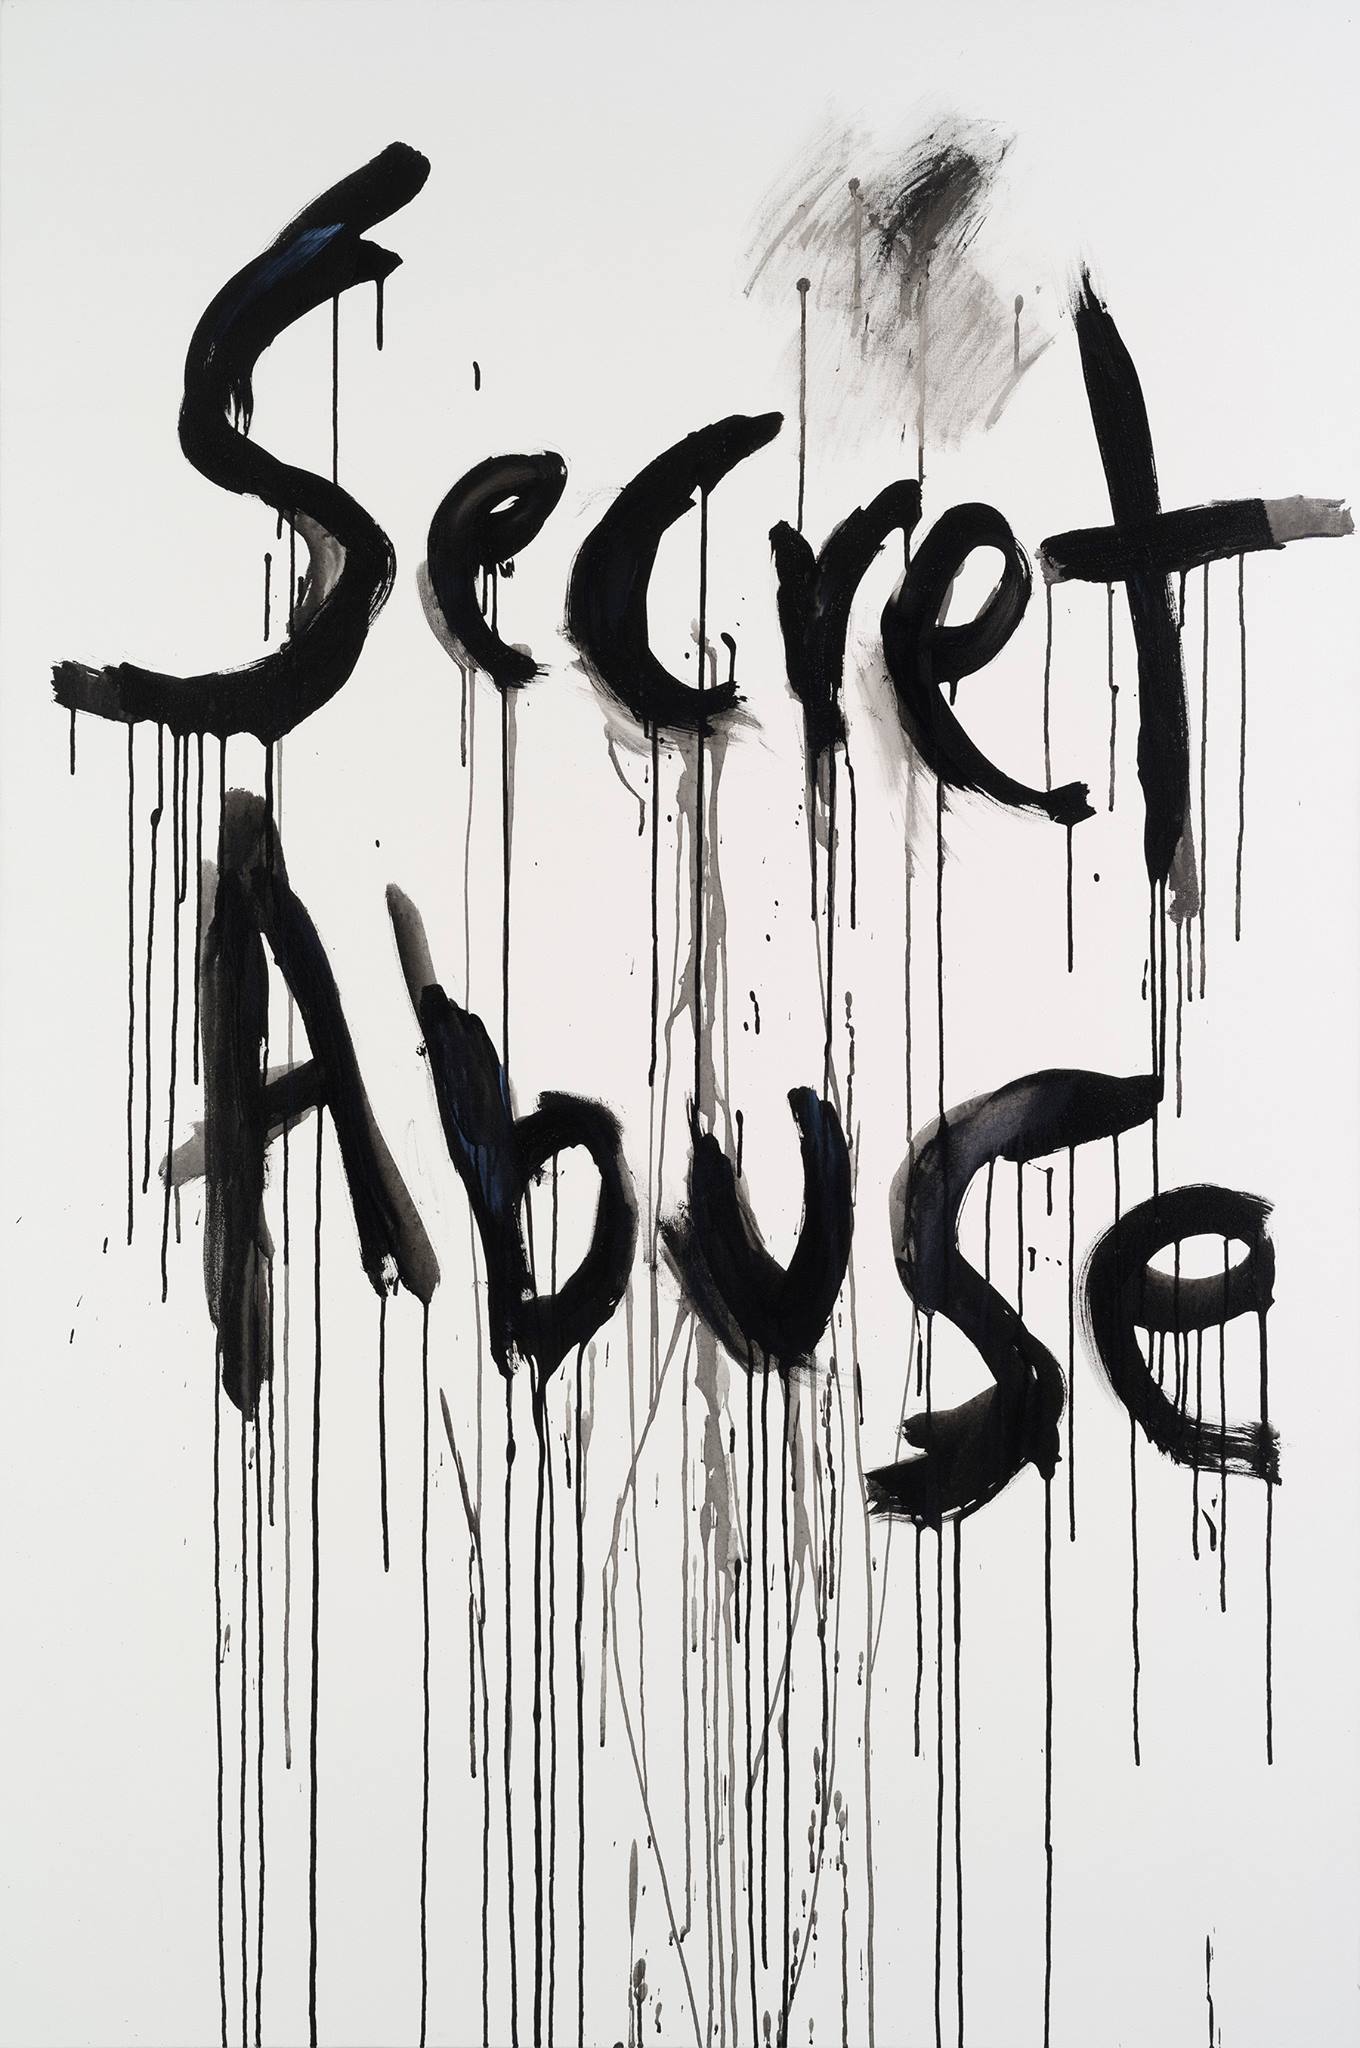 Kim Gordon, "Secret Abuse", 2009, Courtesy of the artist and 303 Gallery